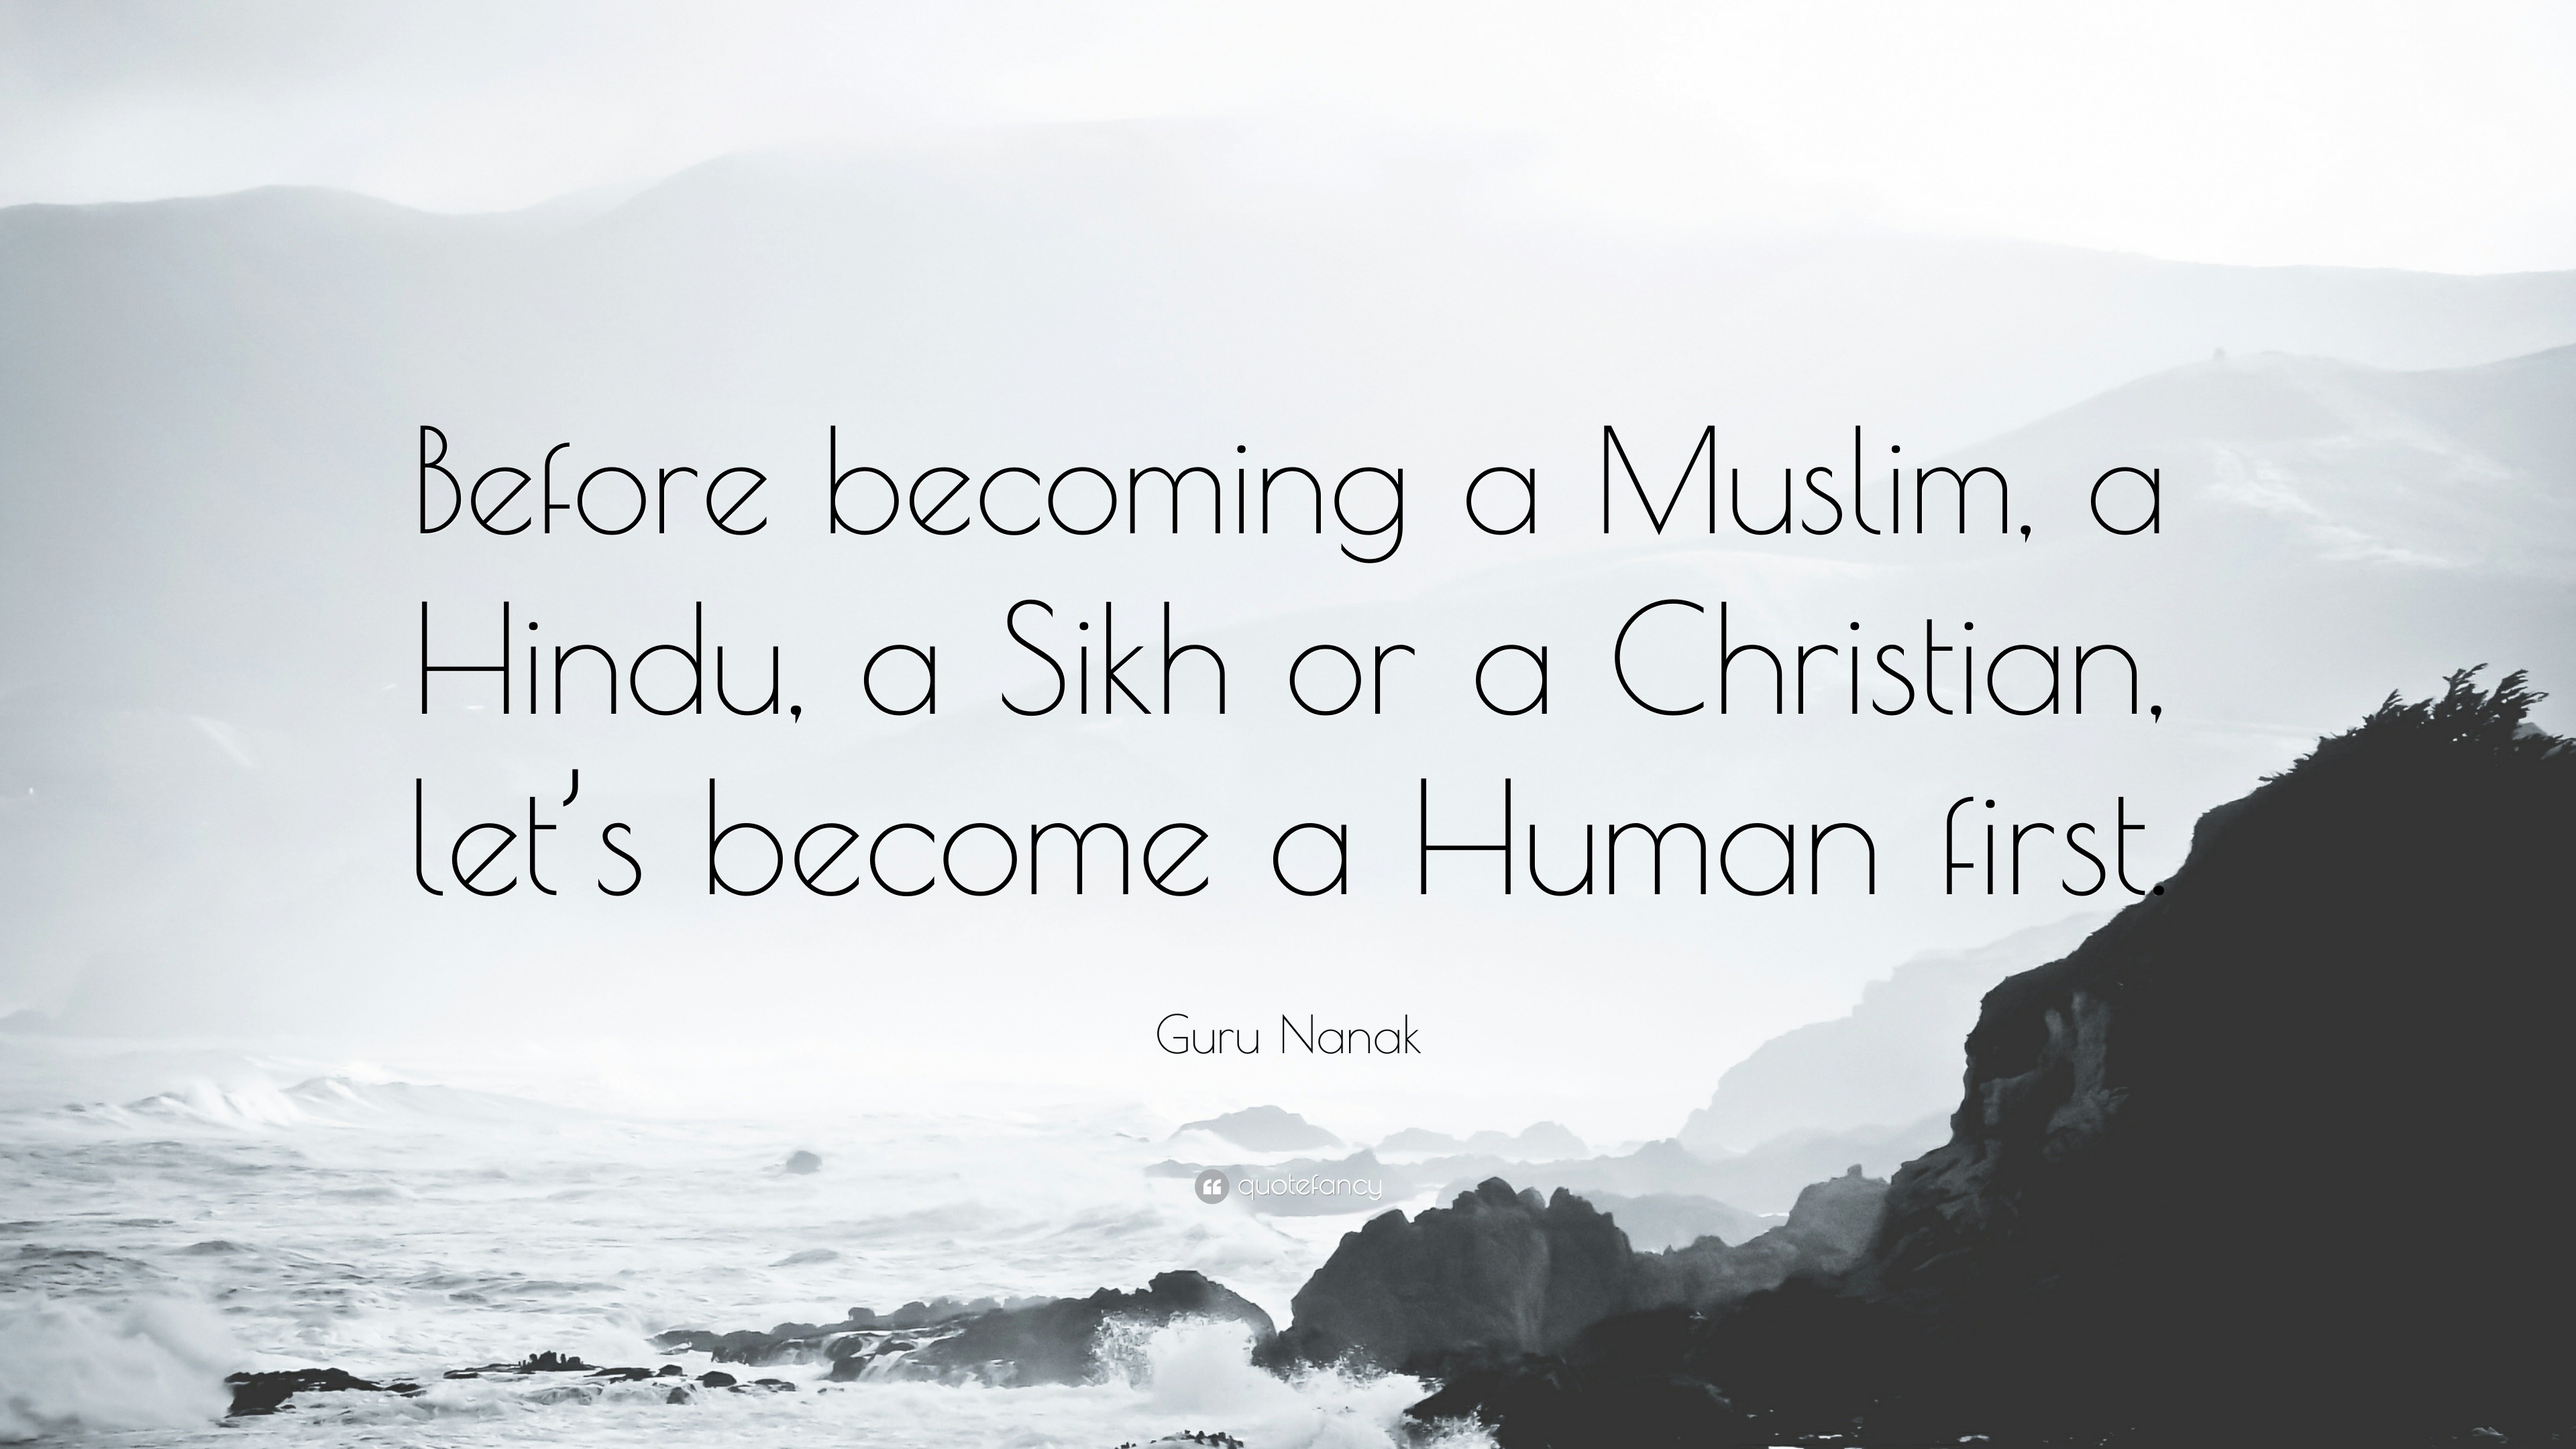 Guru Nanak Quote: “Before becoming a Muslim, a Hindu, a Sikh or a